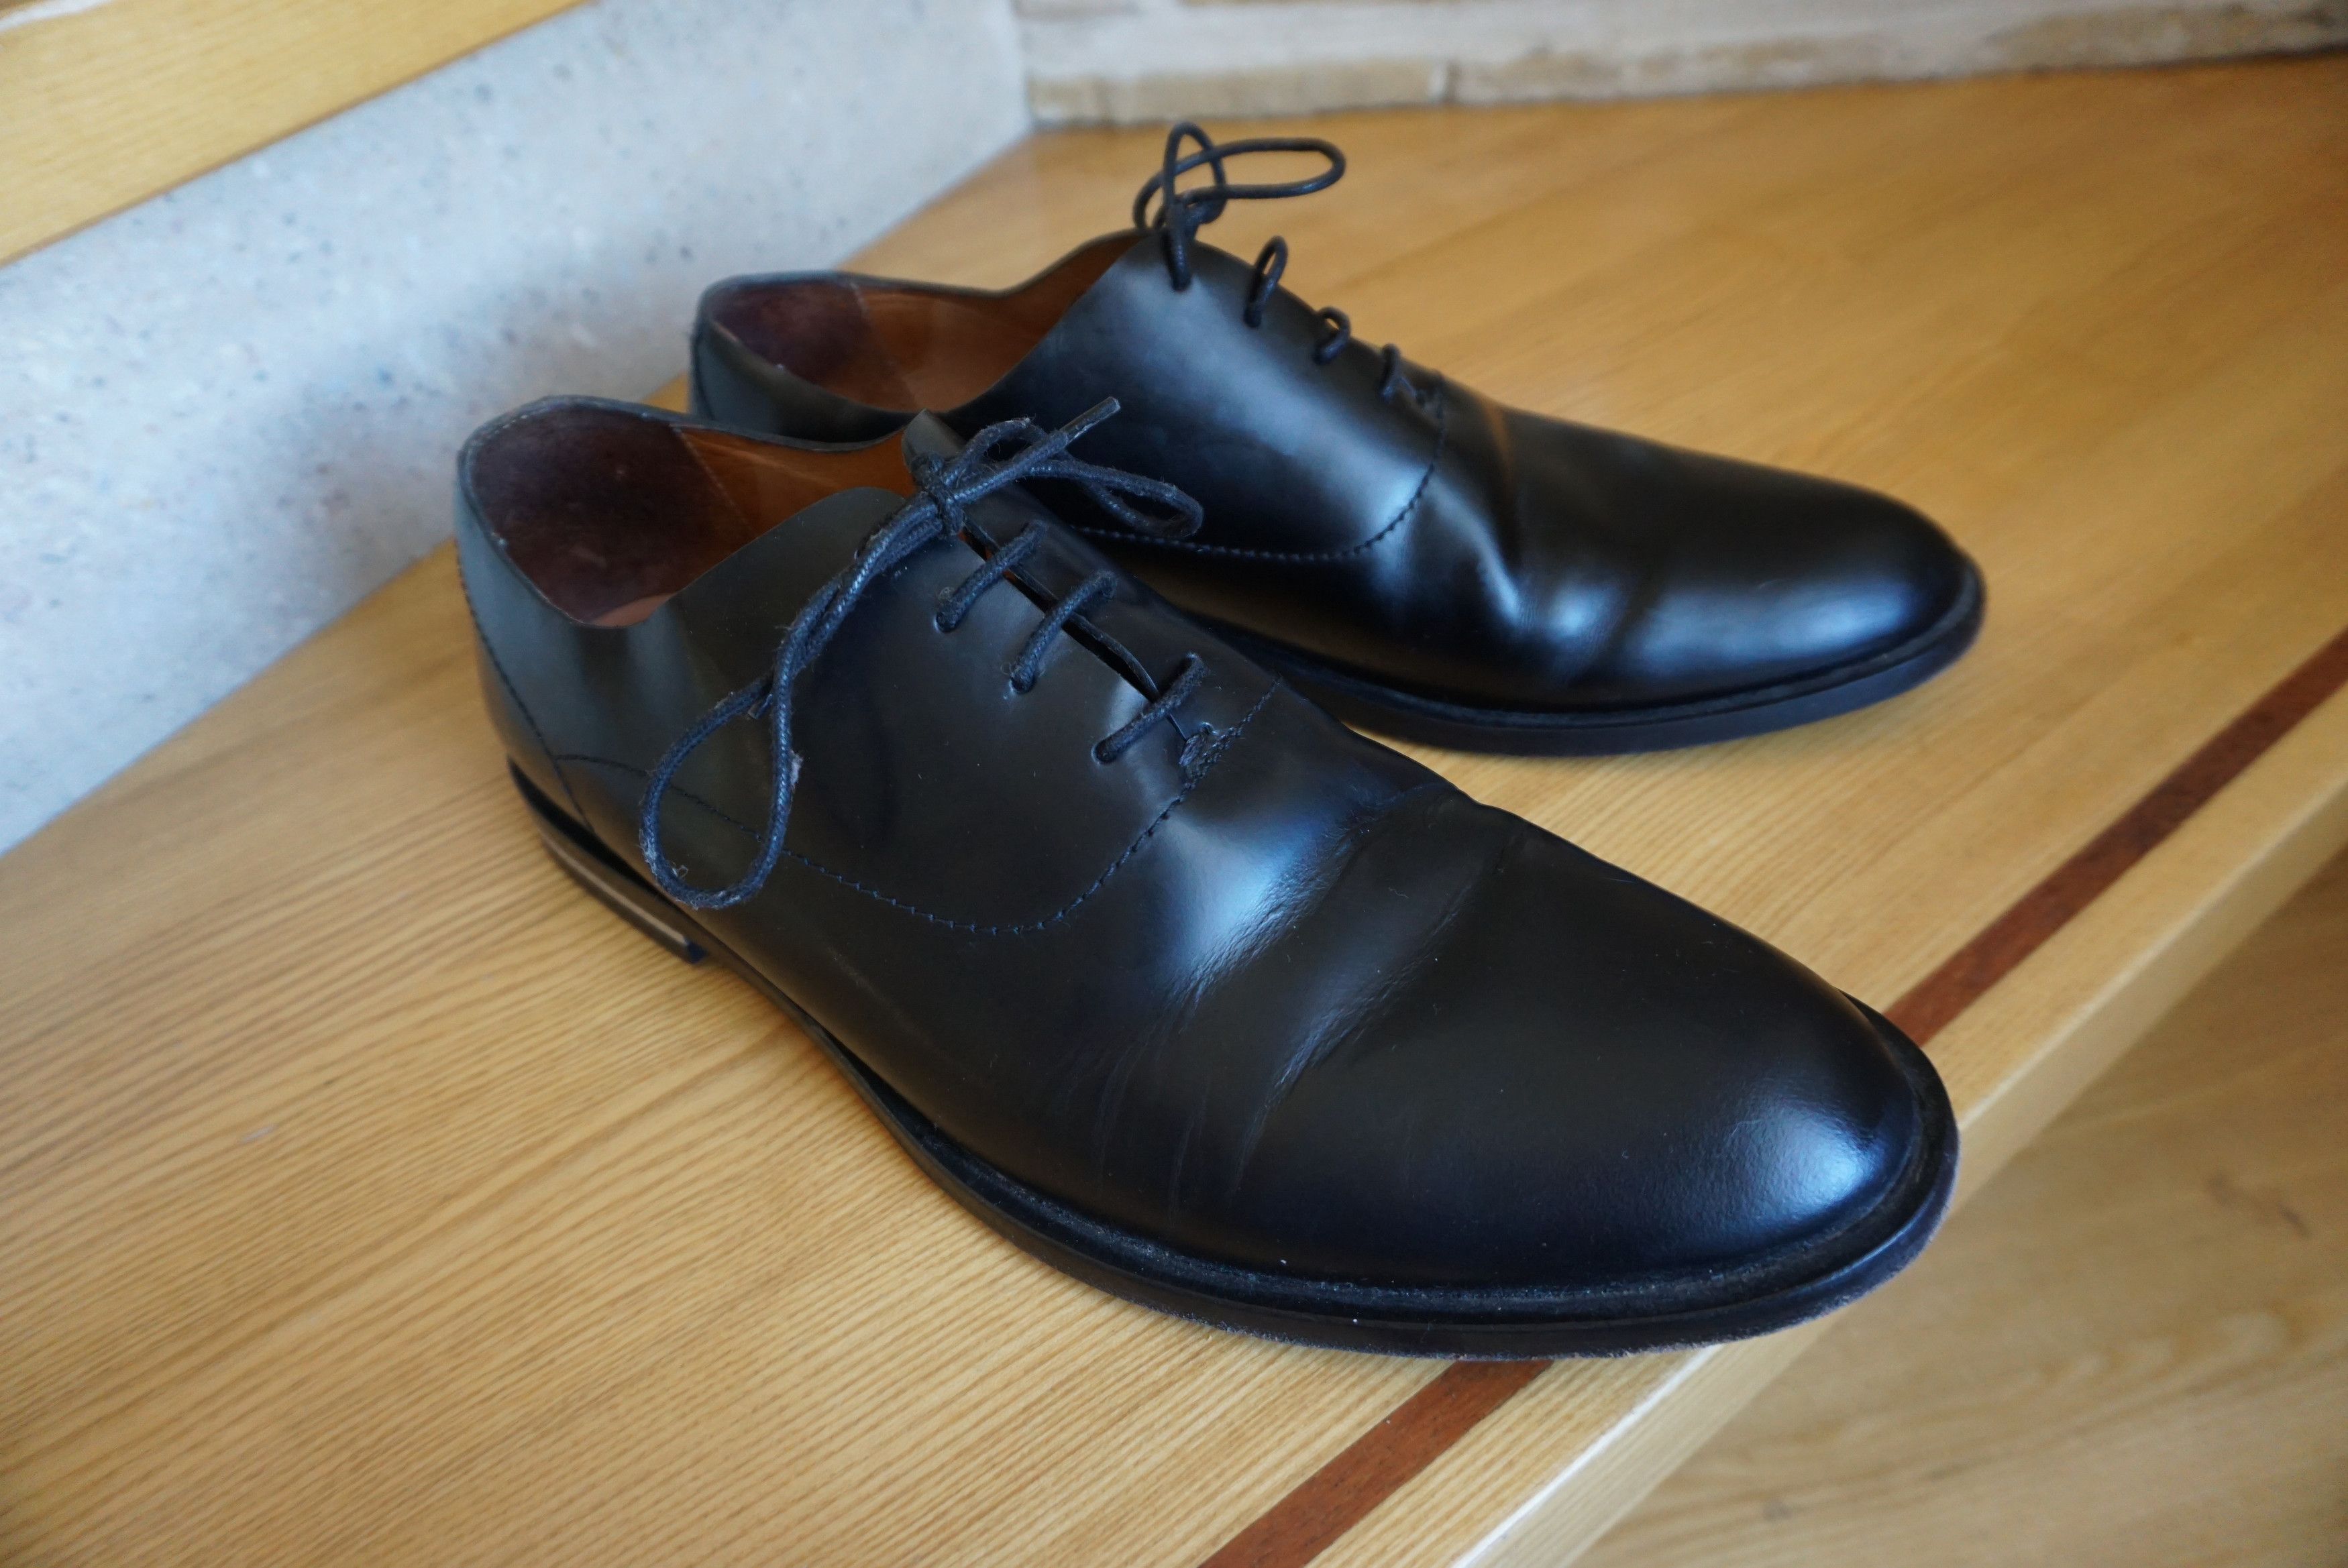 Cos COS RPR$250 leather office shoes EU44 black formal lace up Size US 10.5 / EU 43-44 - 20 Thumbnail